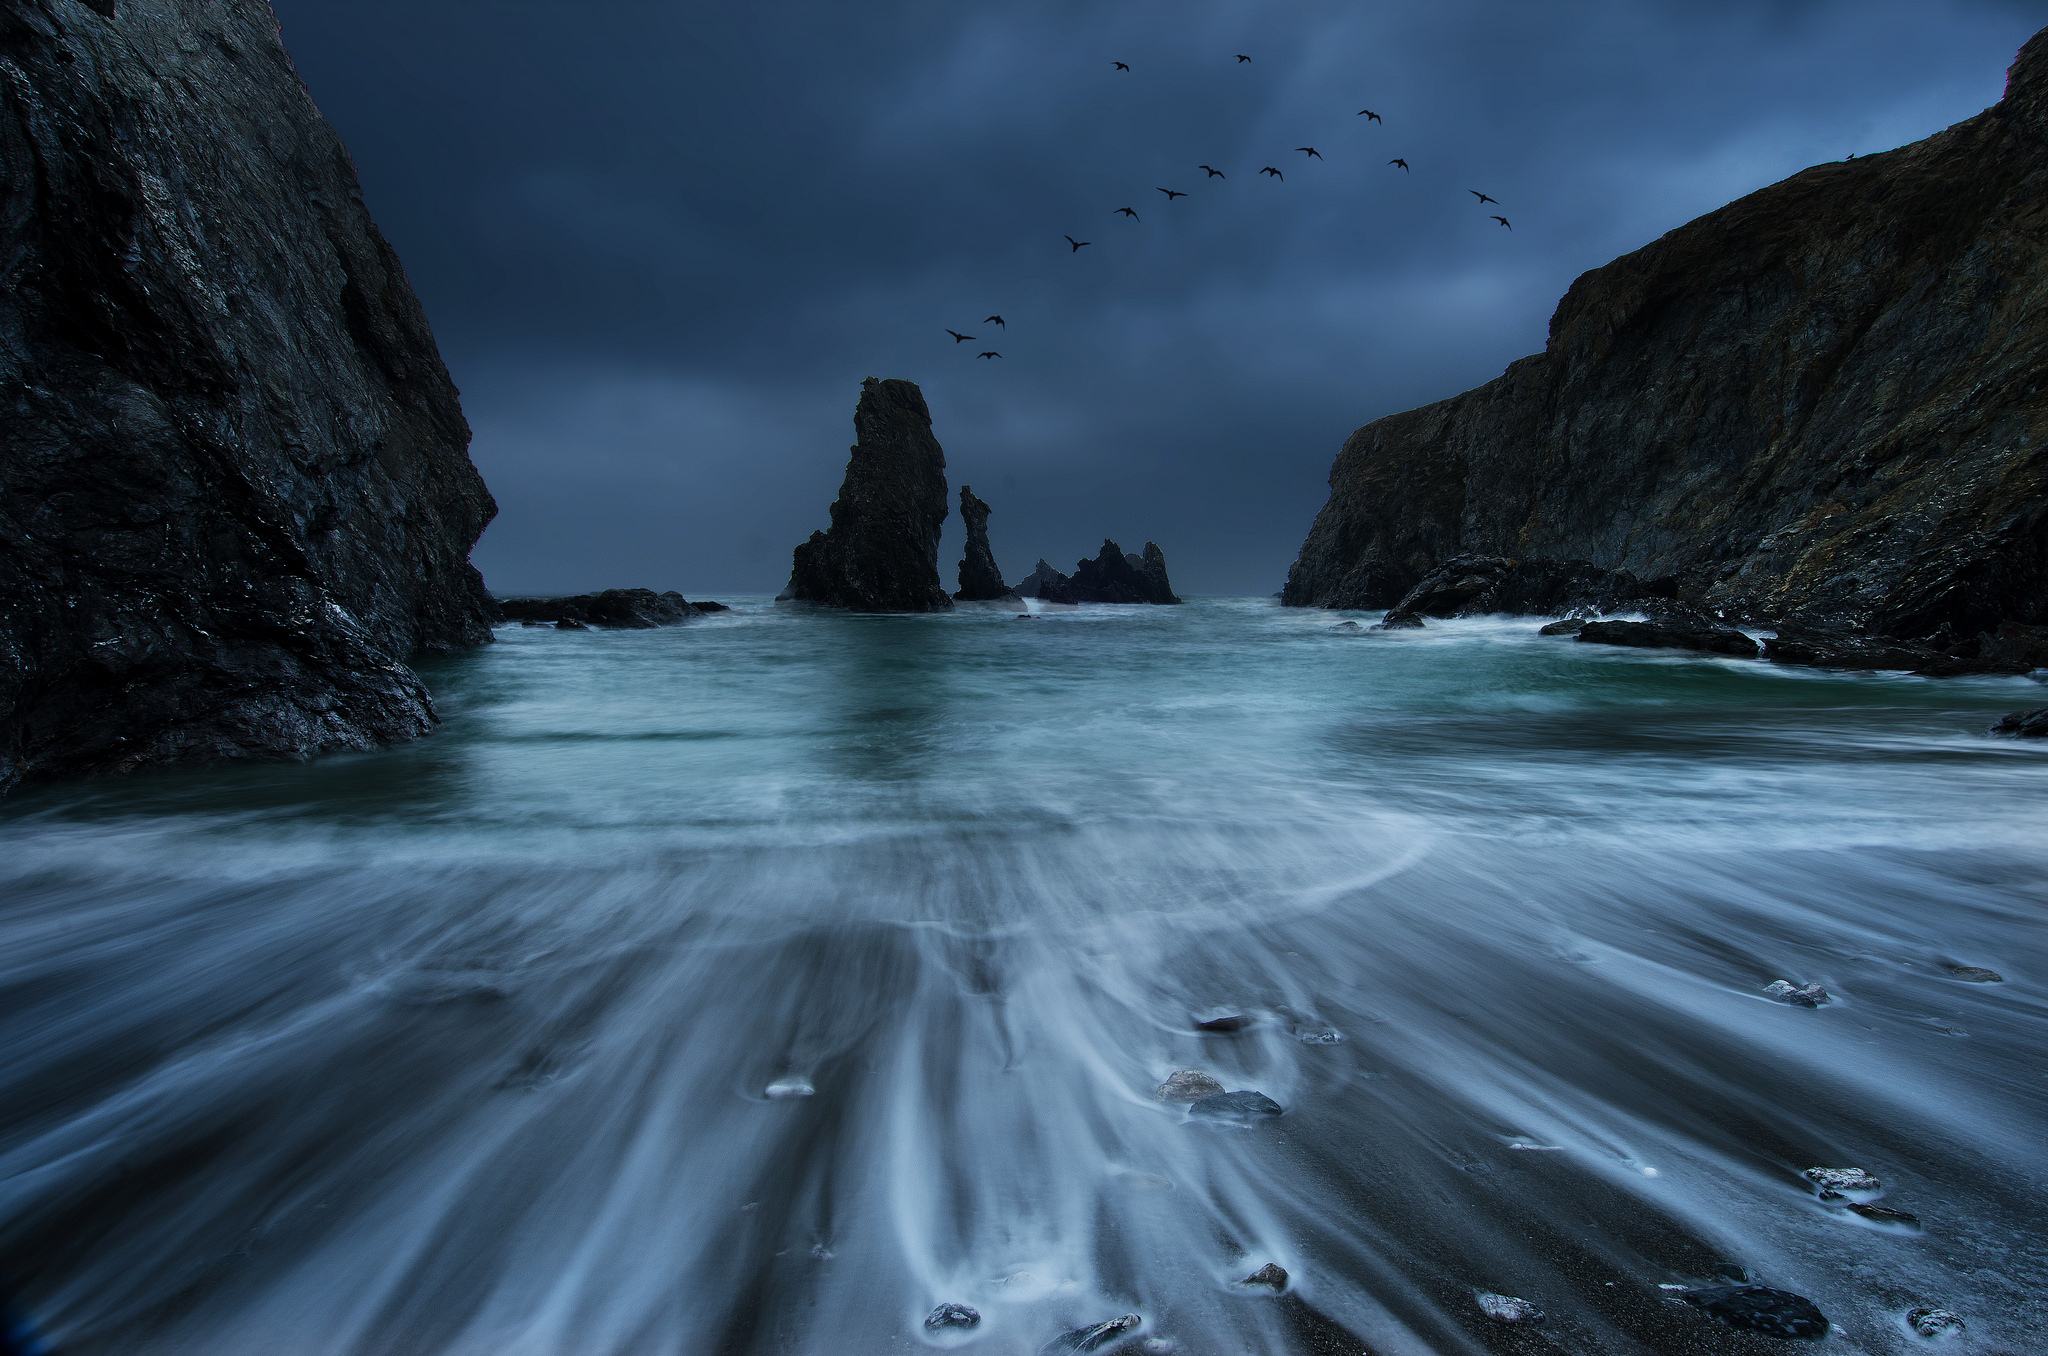 Берег океана в шторм. Скандинавия скалы шторм. Ночное море. Море скалы. Океан и горы.